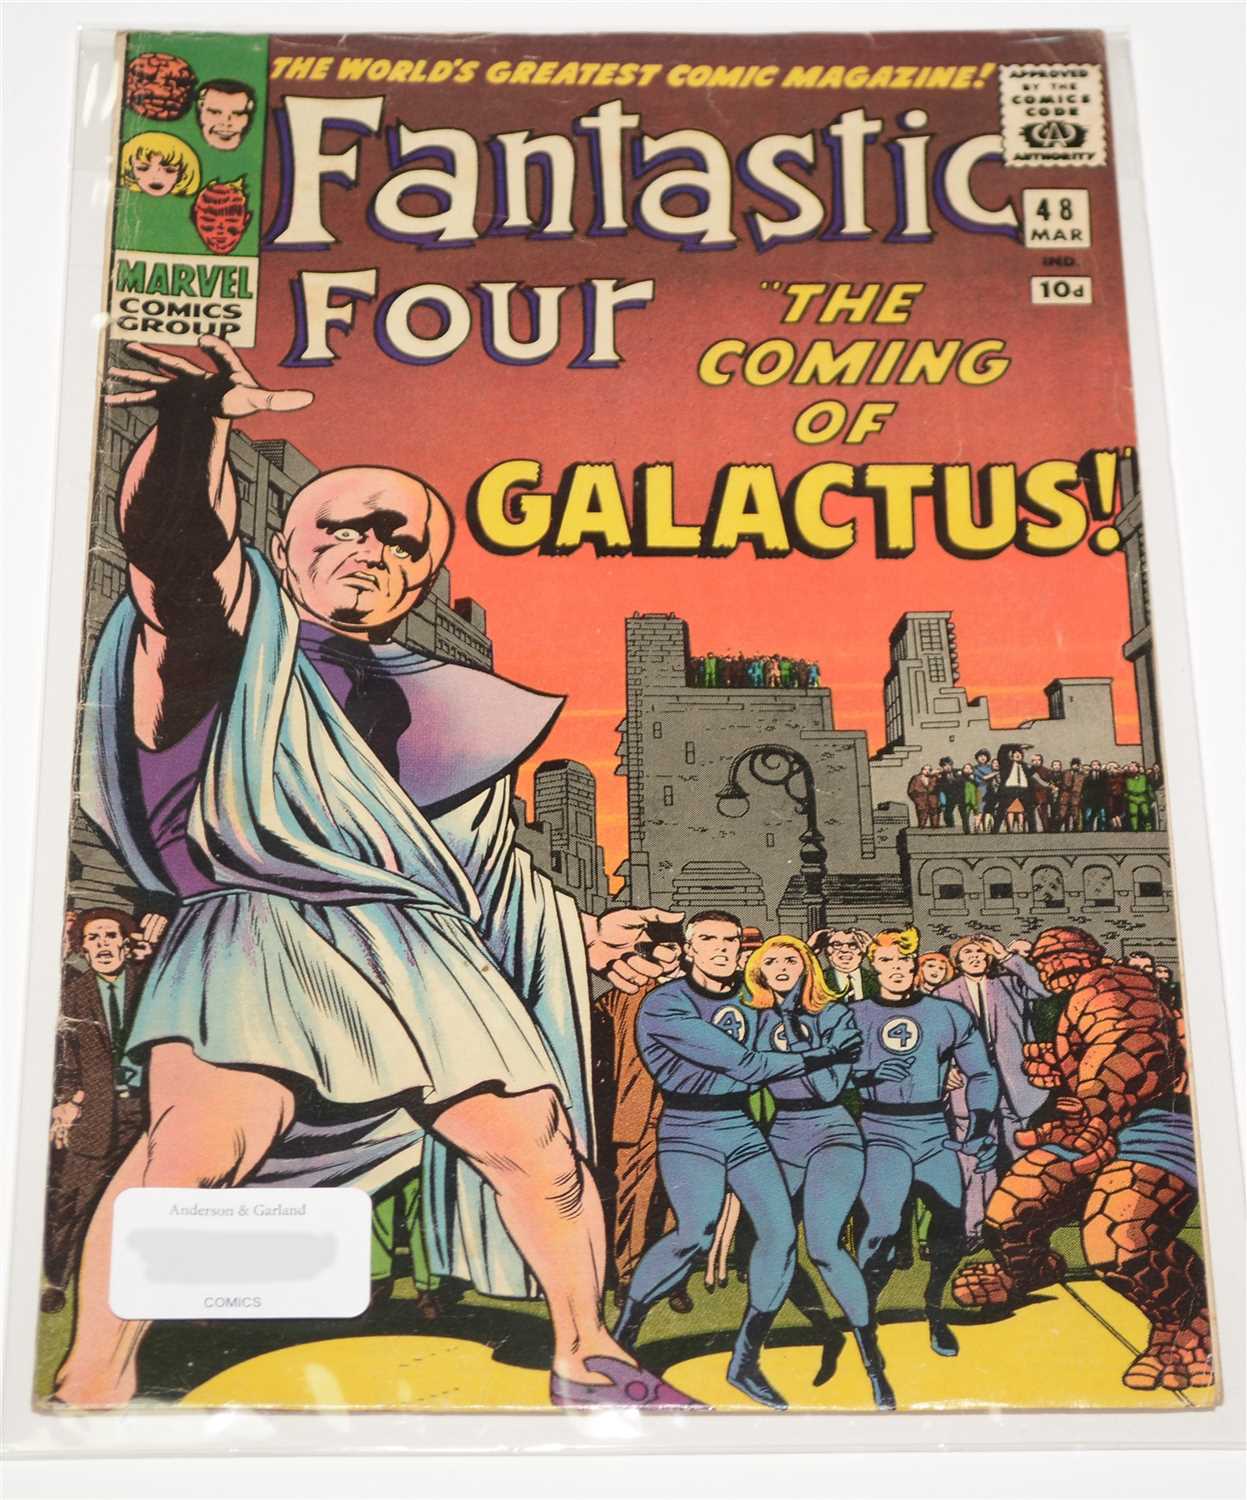 Lot 1725 - The Fantastic Four No.48 Comic